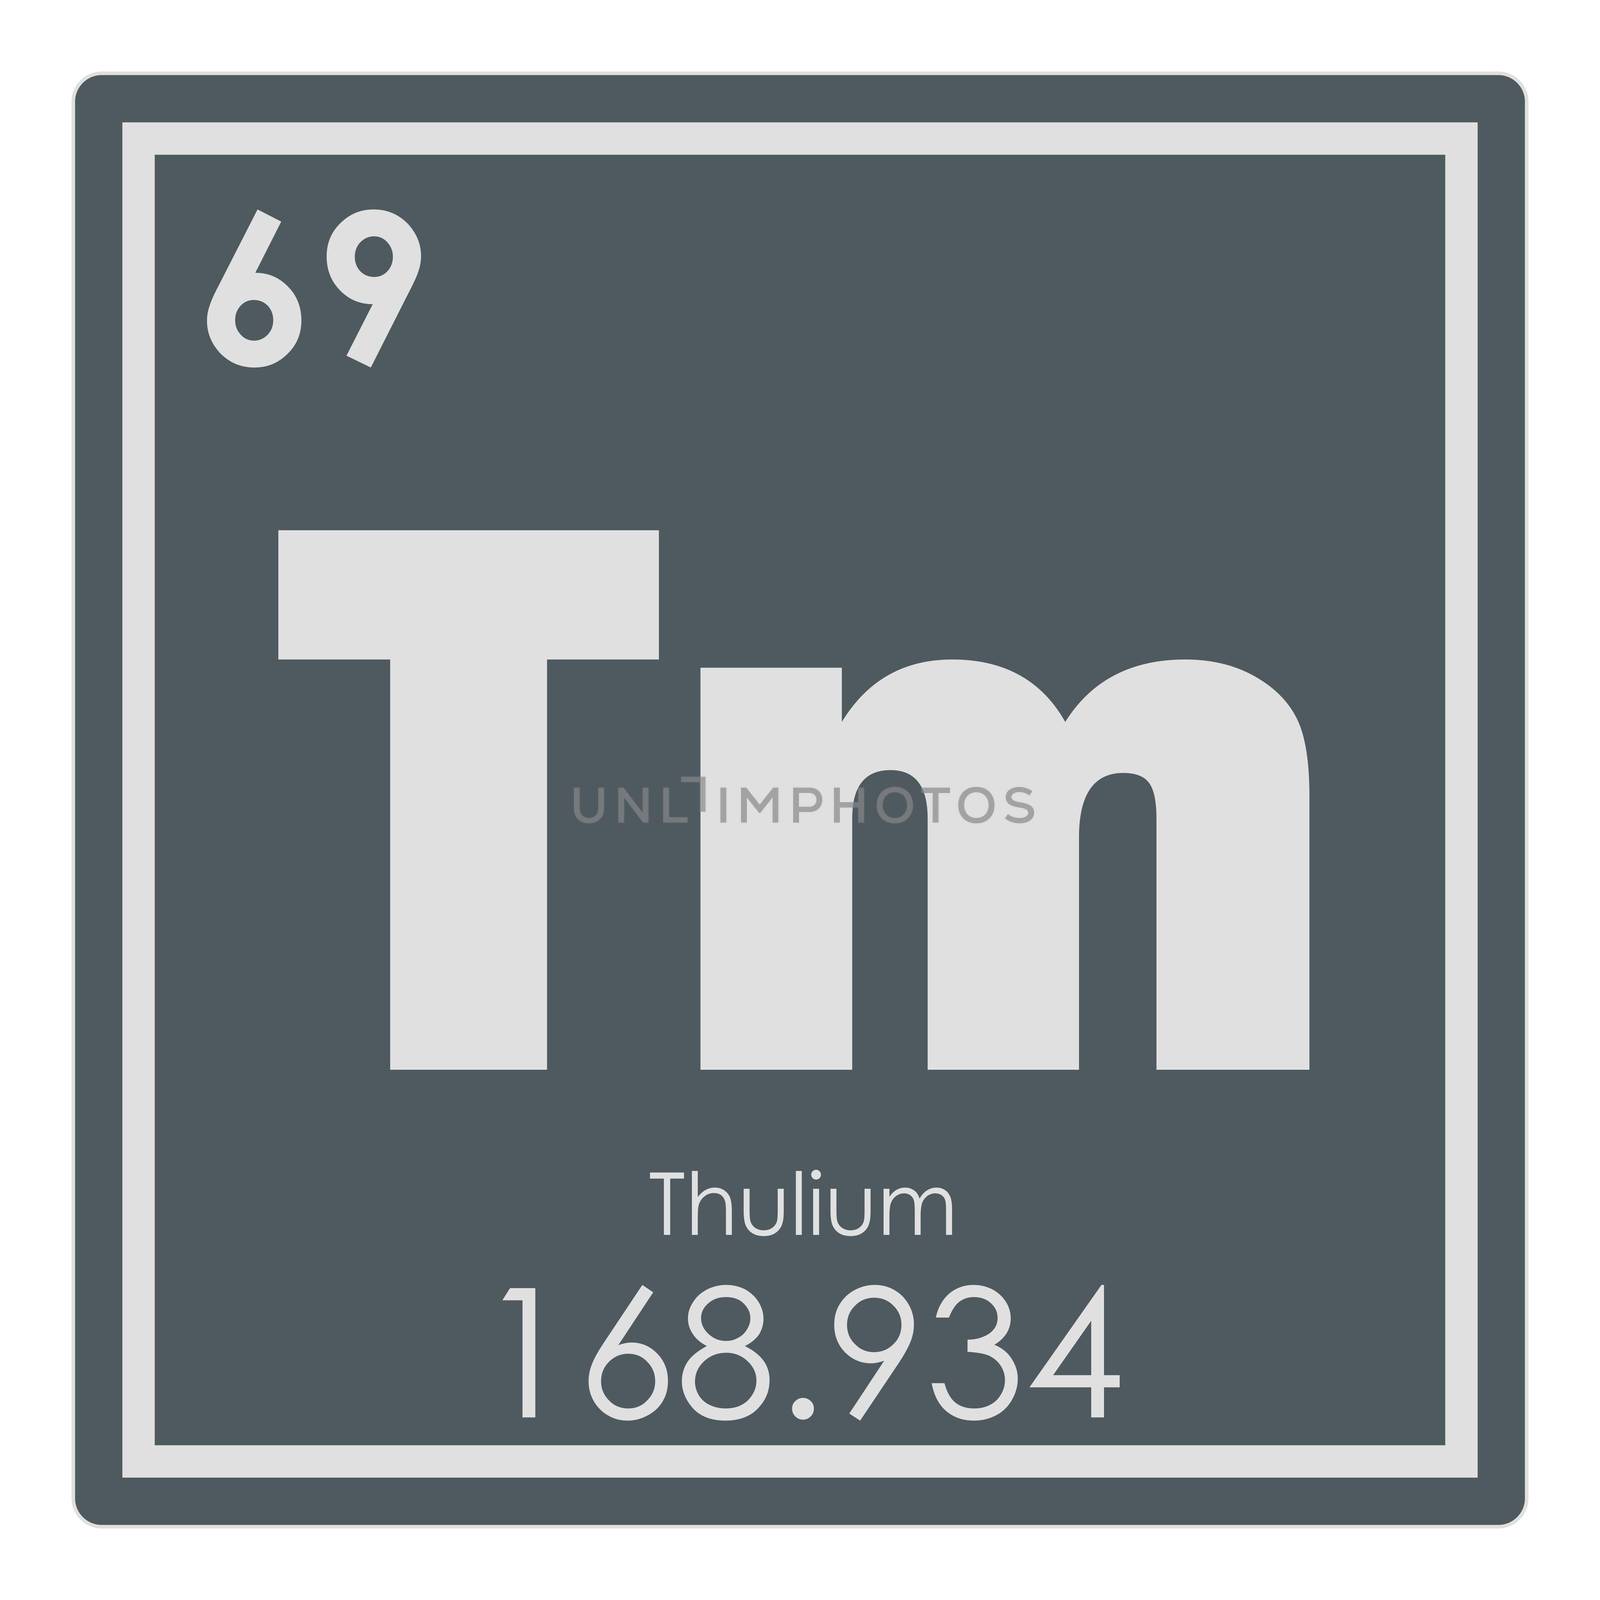 Thulium chemical element by tony4urban